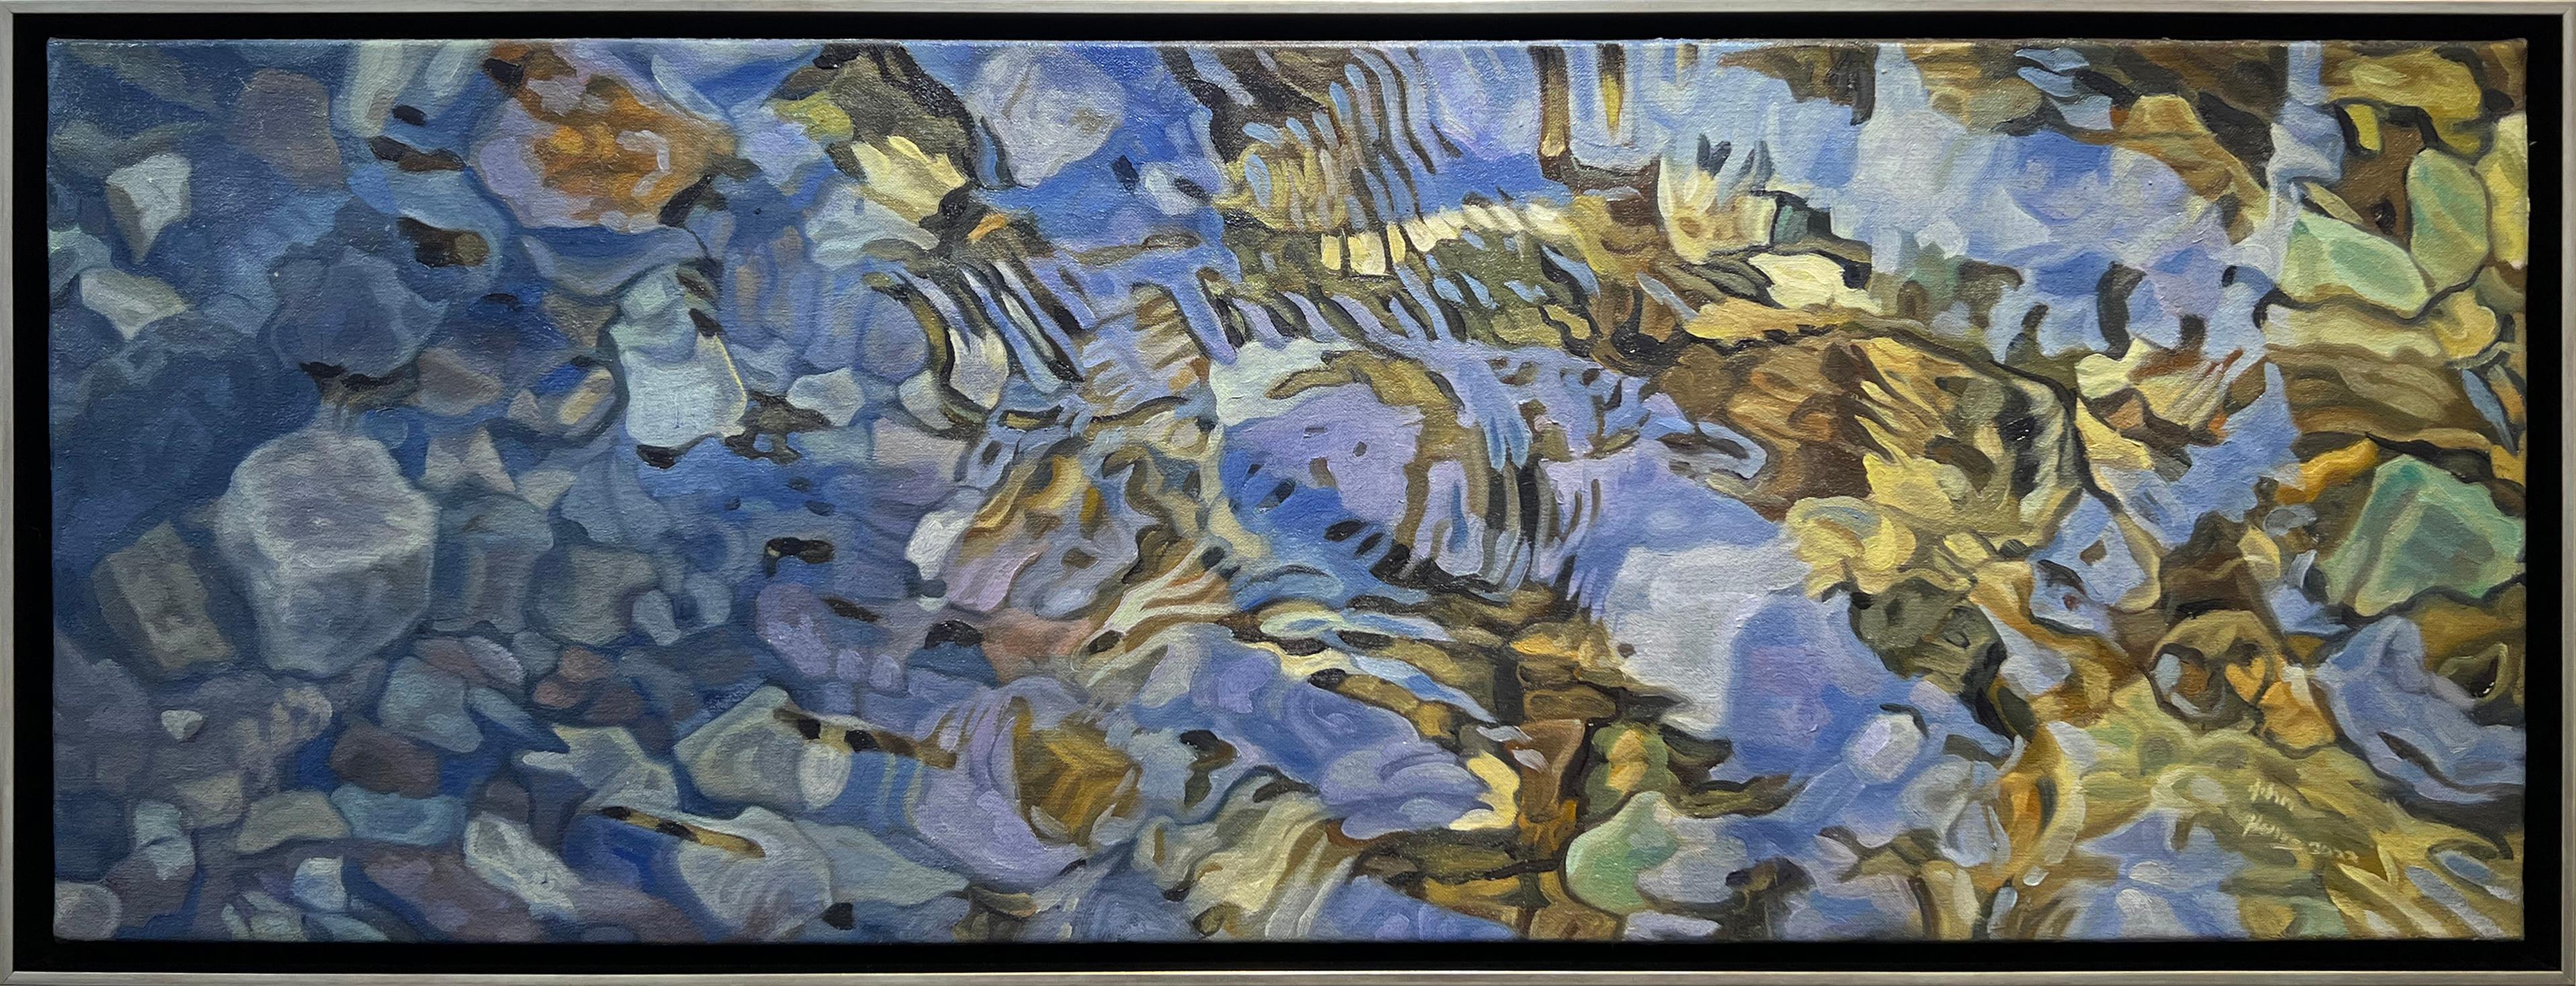 John Harris Landscape Painting - "Boulder Brook, " Impressionistic Landscape Oil Painting